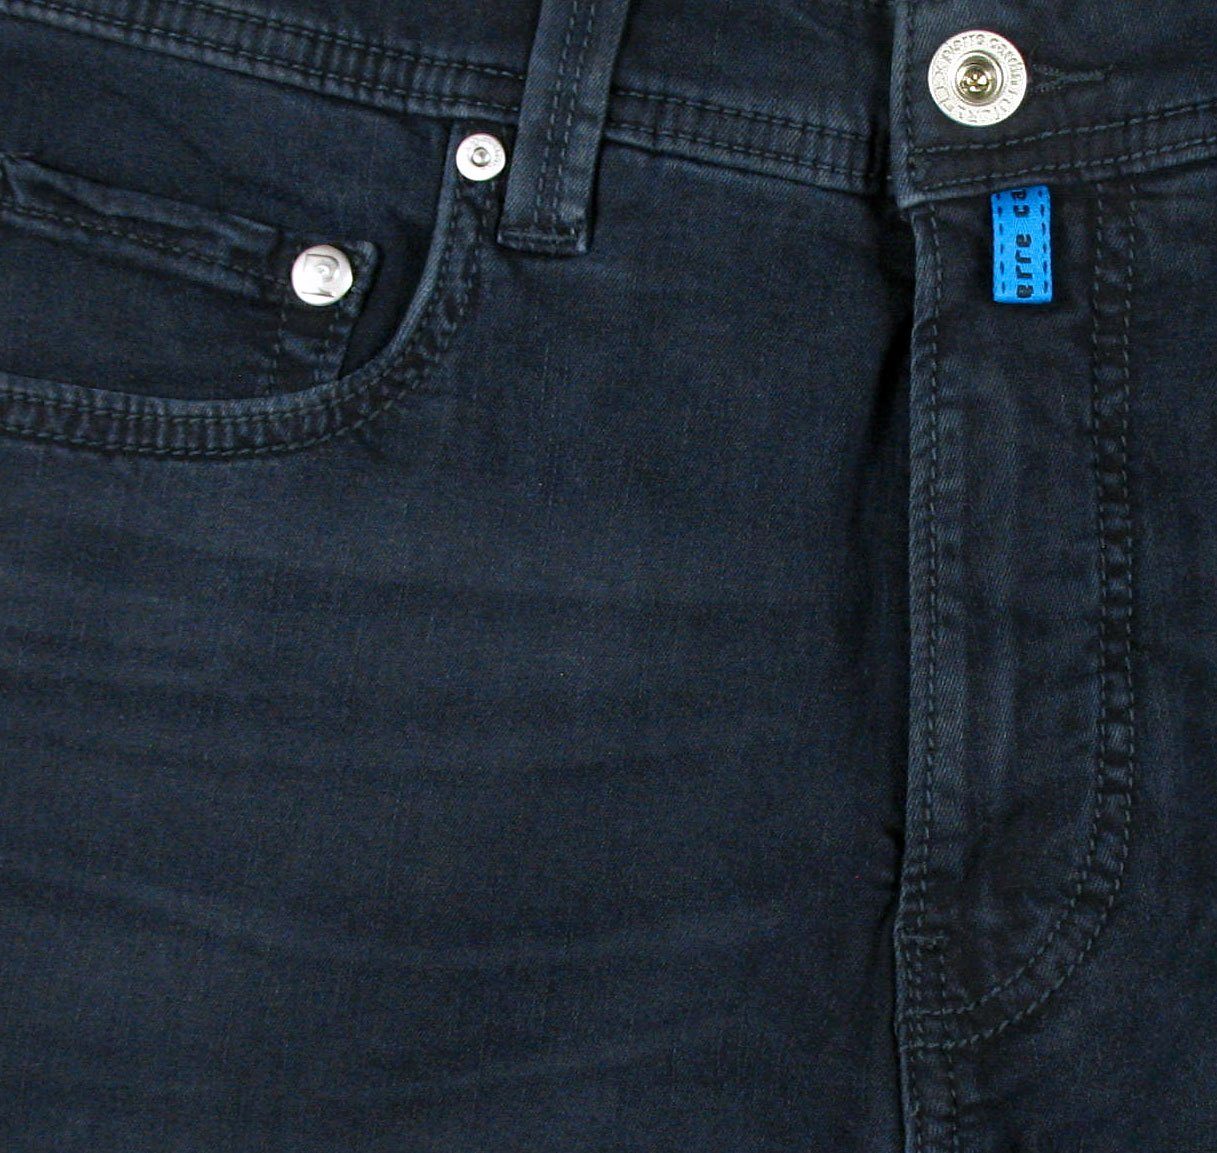 Pierre Cardin Blue 5-Pocket-Jeans Organic Fit Jeans Lyon Futureflex Tapered Deep Cotton Buffies